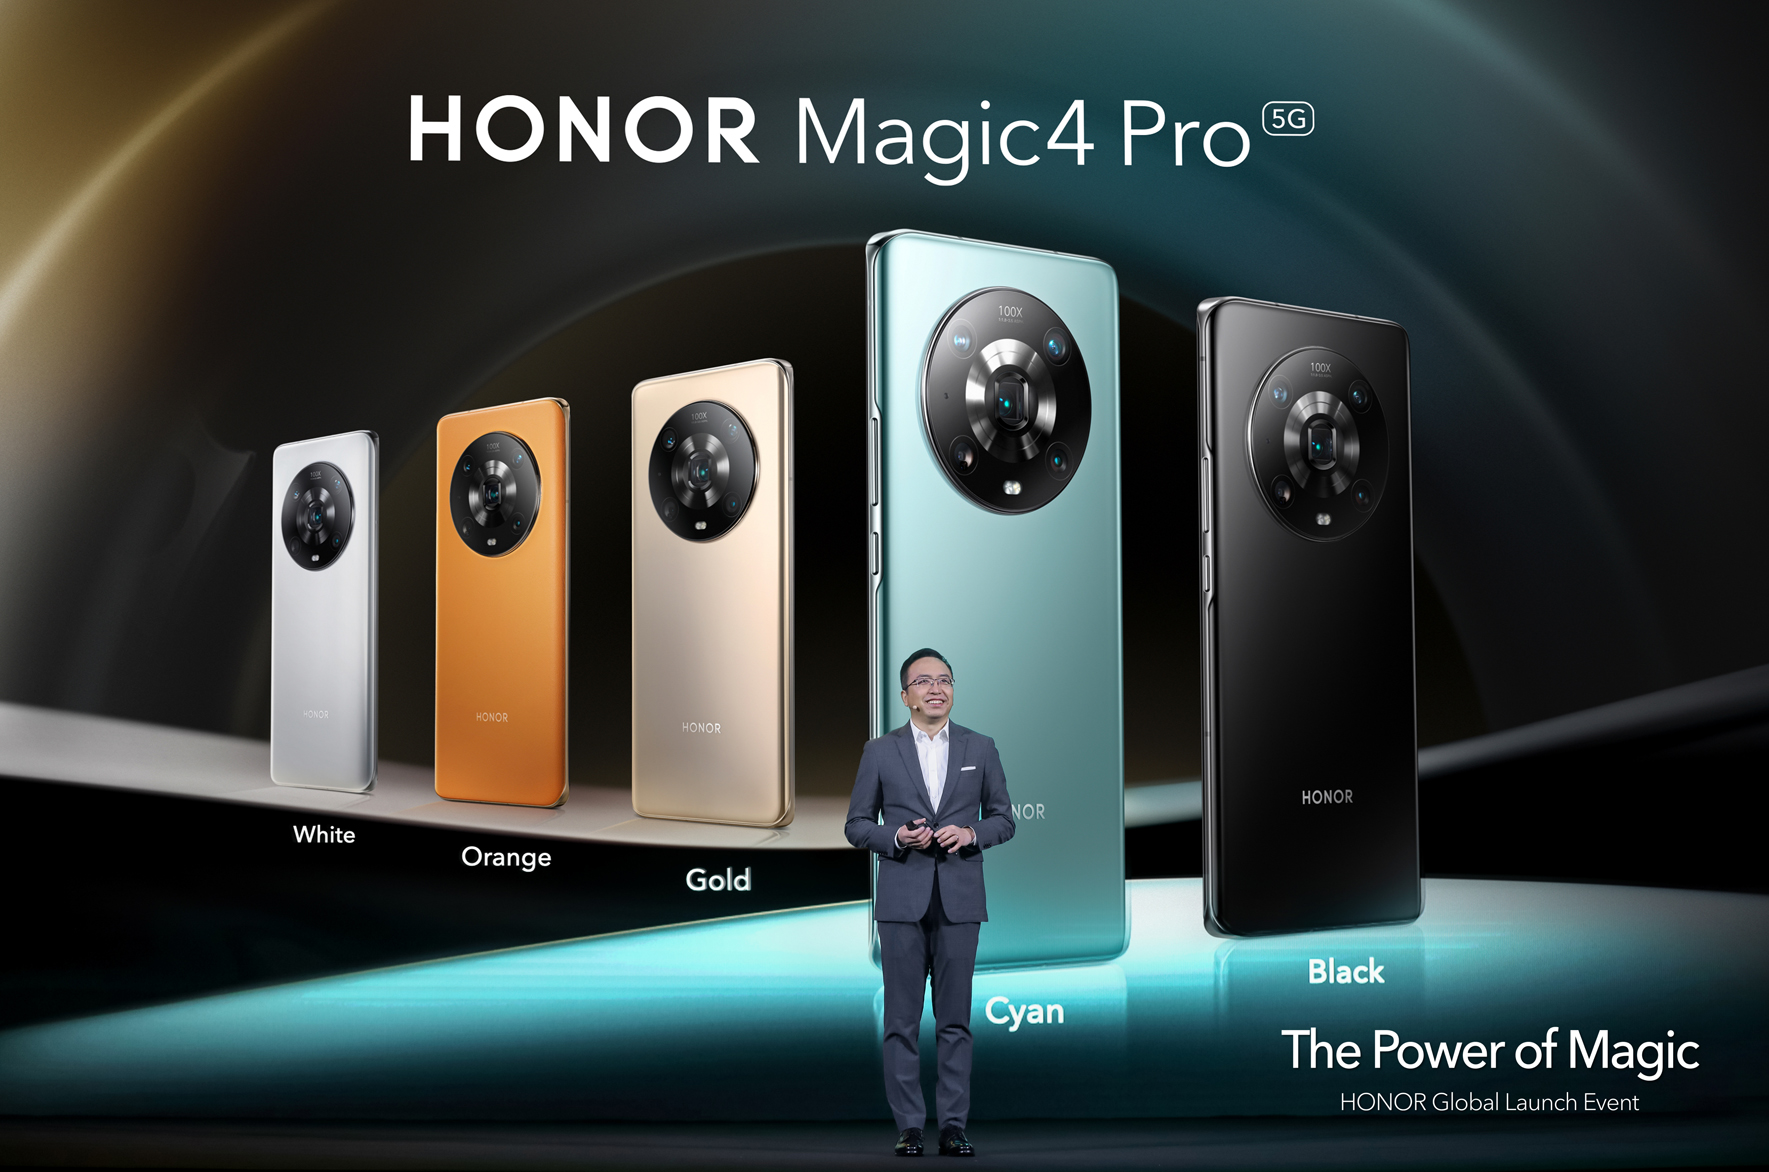 Honor Magic 4 Pro brings 100W fast charging, incredible cameras, and so